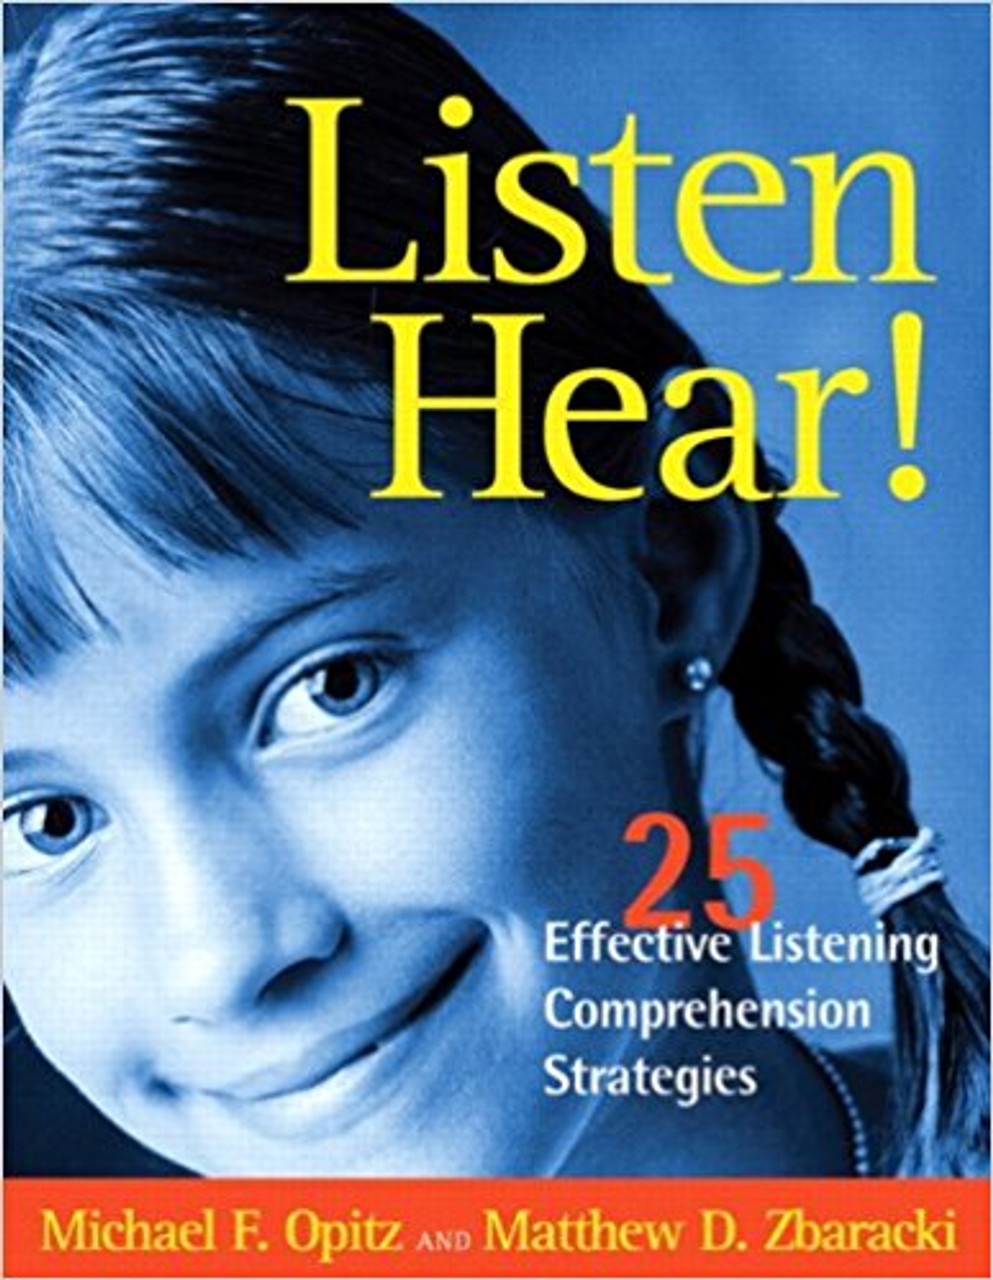 Listen Hear!: 25 Effective Listening Comprehension Strategies by Michael F Opitz